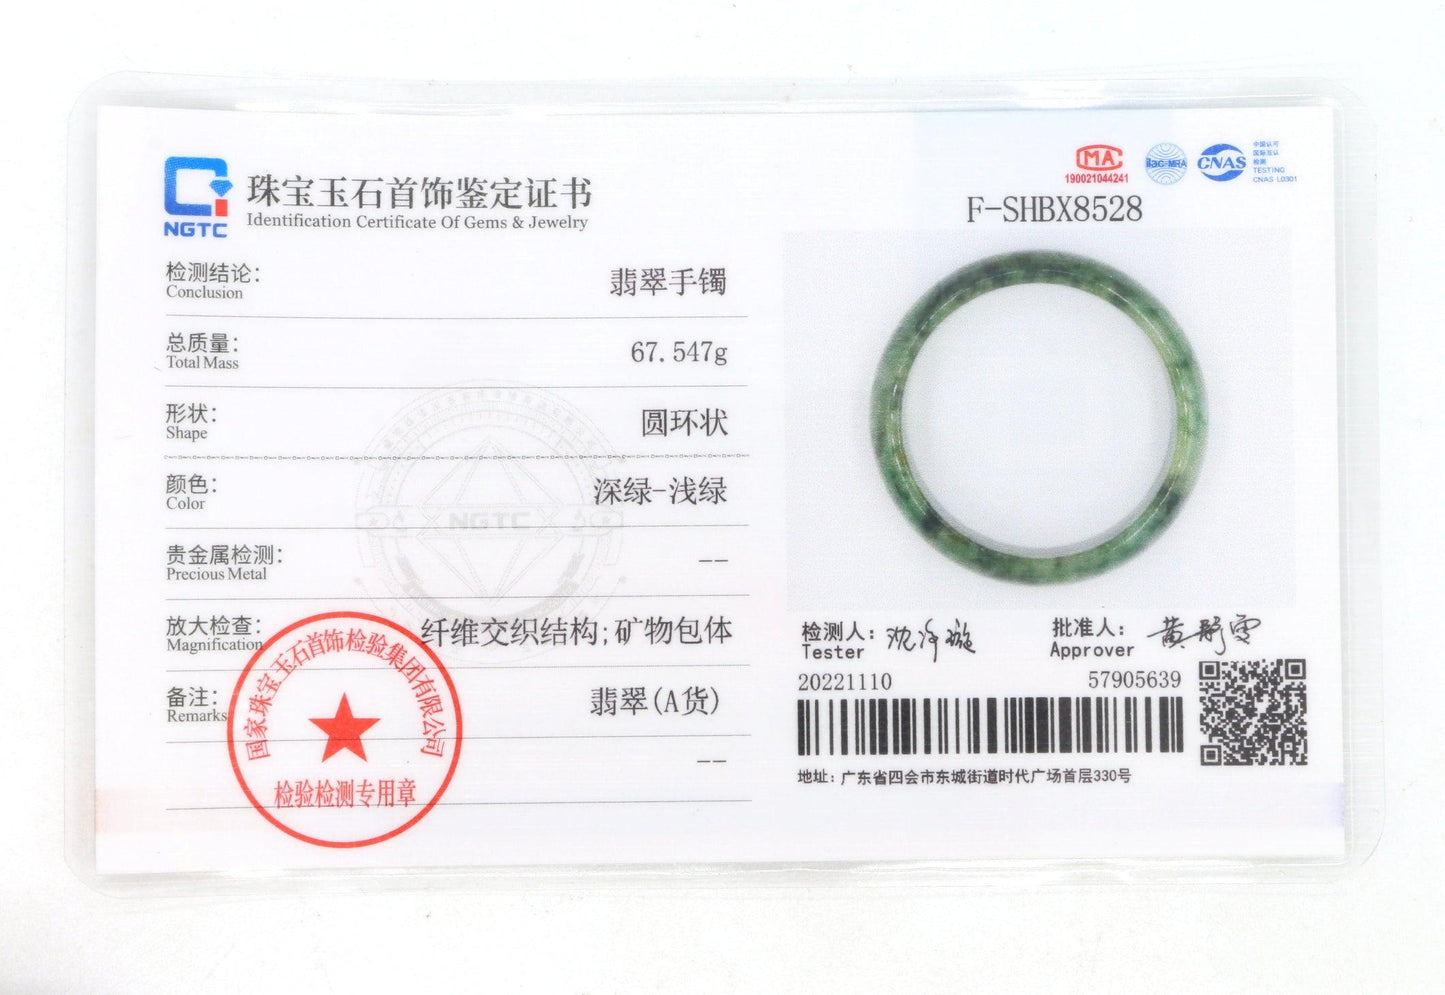 Type A Certified Jadeite Jade Bangle Size 56 -58mm B0BN9RFK47 - Jade-collector.com